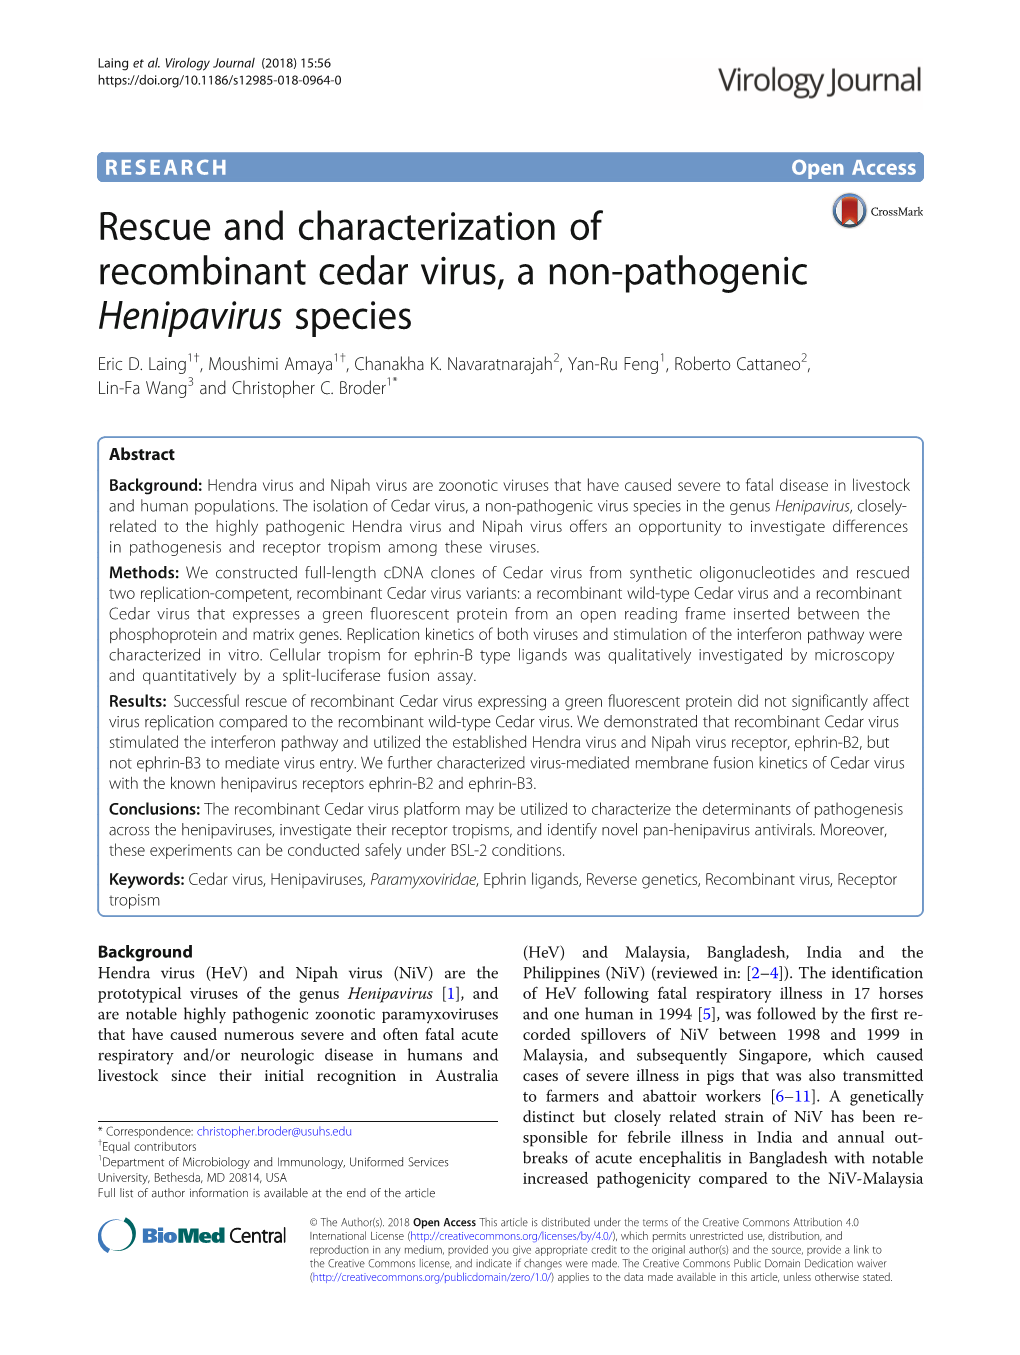 Rescue and Characterization of Recombinant Cedar Virus, a Non-Pathogenic Henipavirus Species Eric D